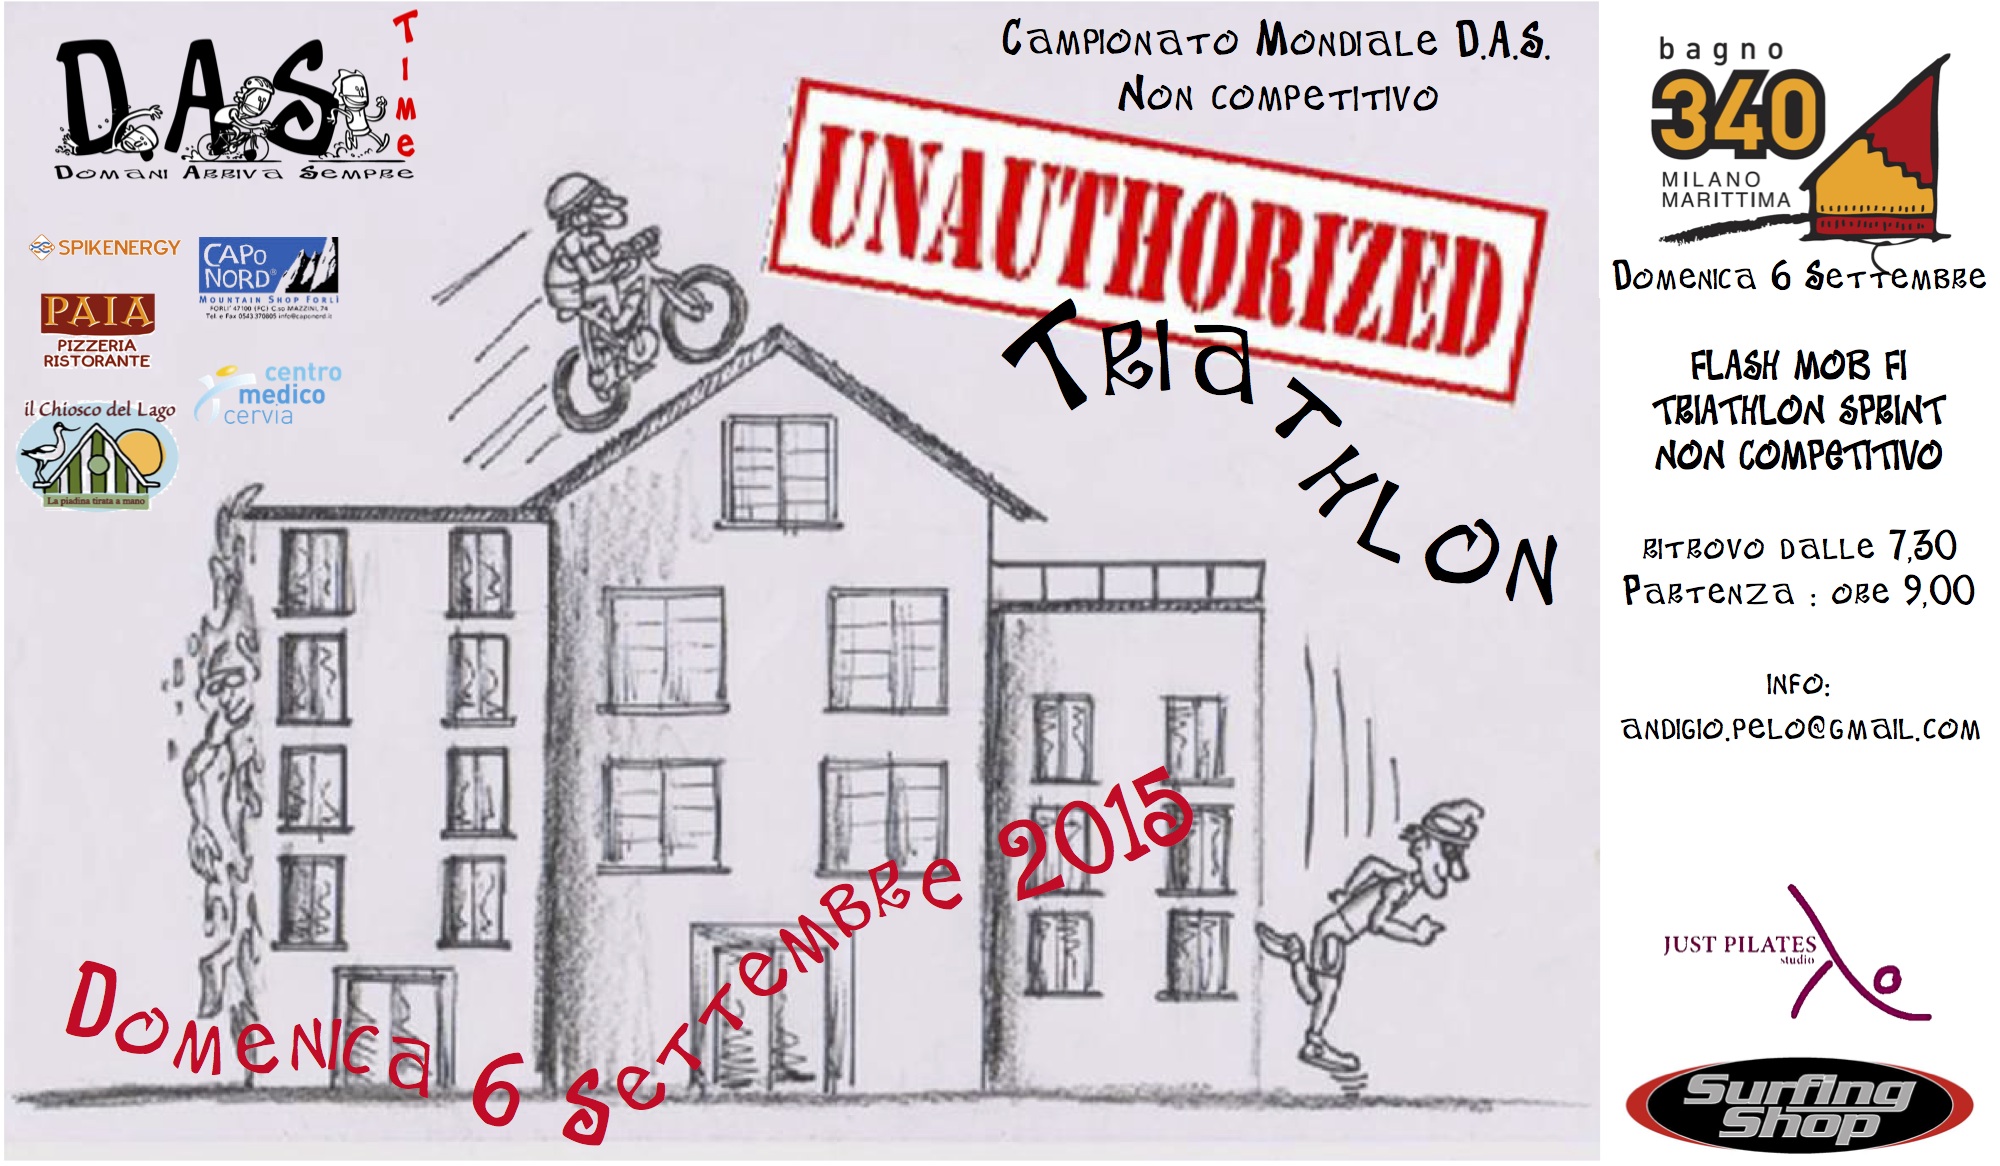 unautorhized triathlon